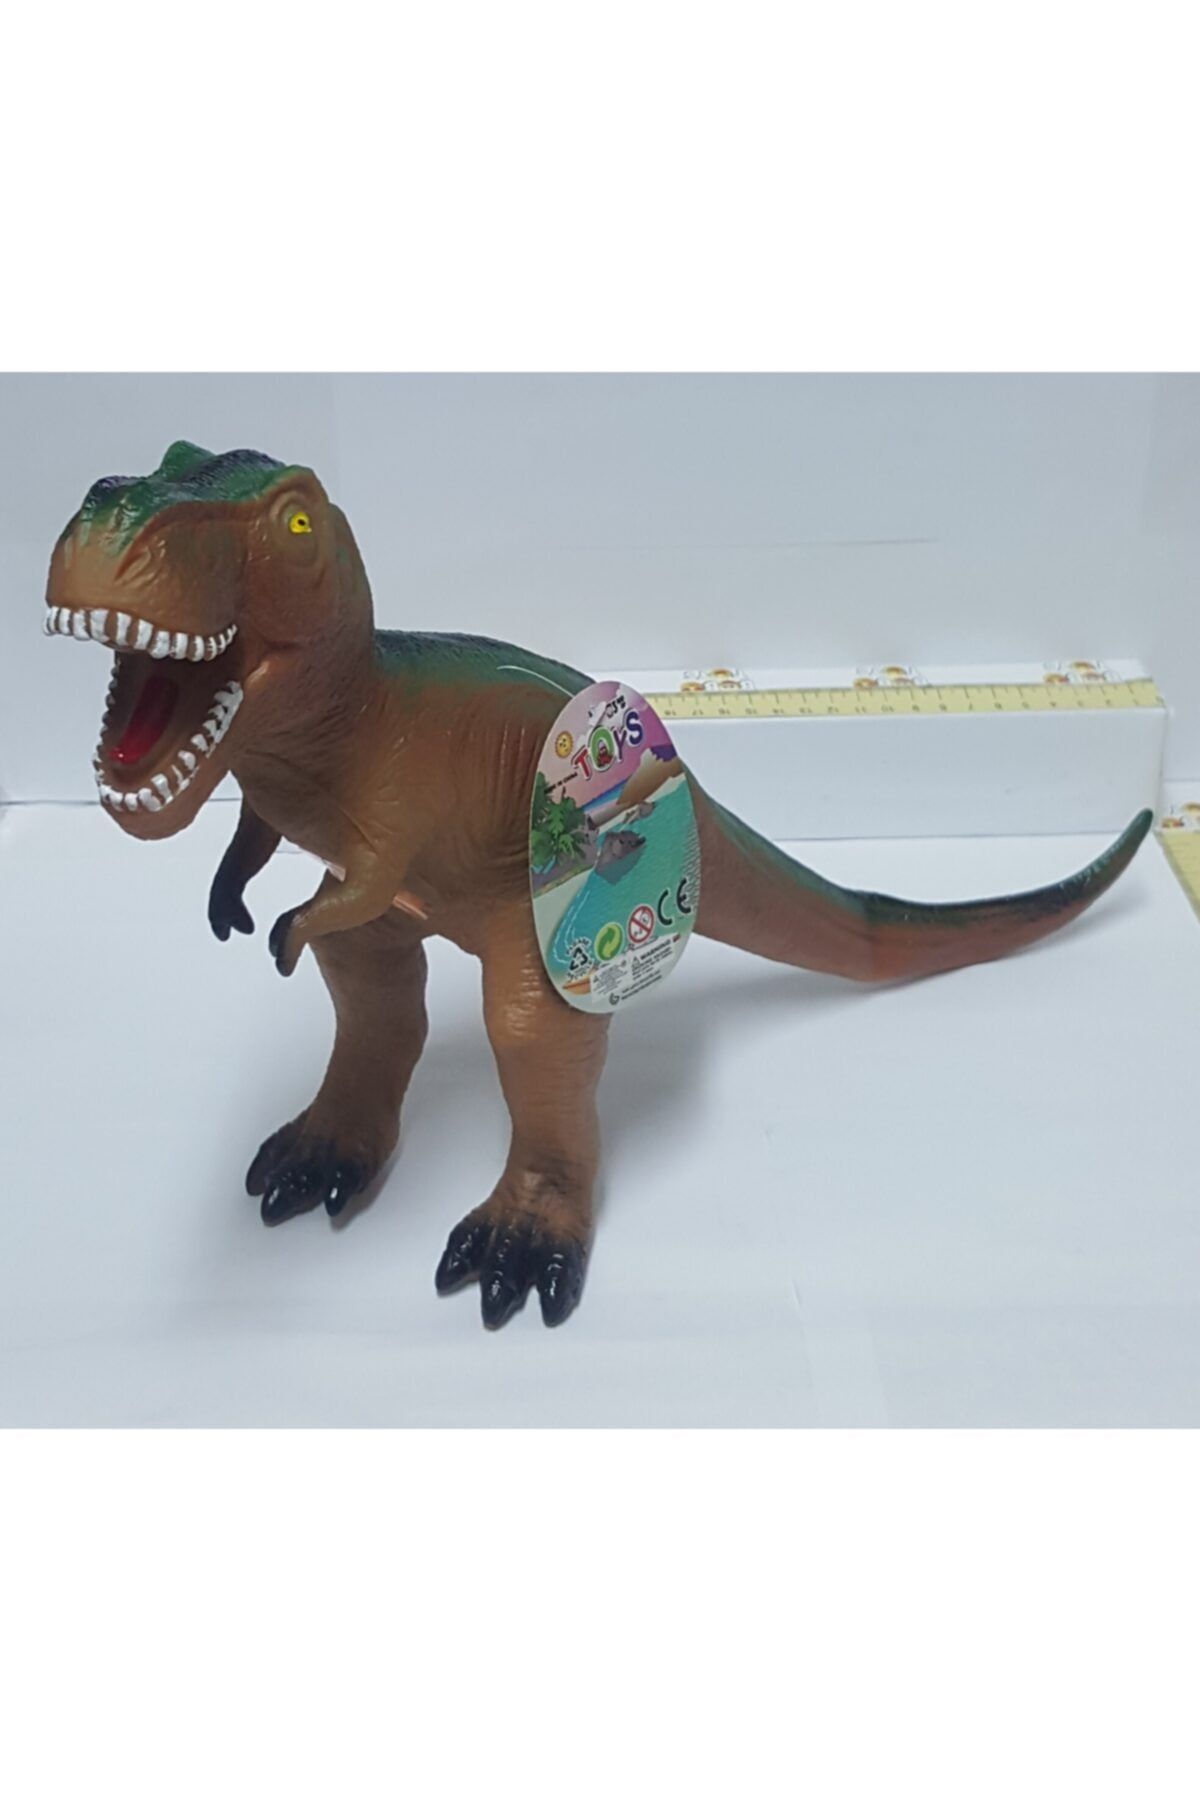 Brother Toys Sesli 47cm. Soft Dinazor T-rex